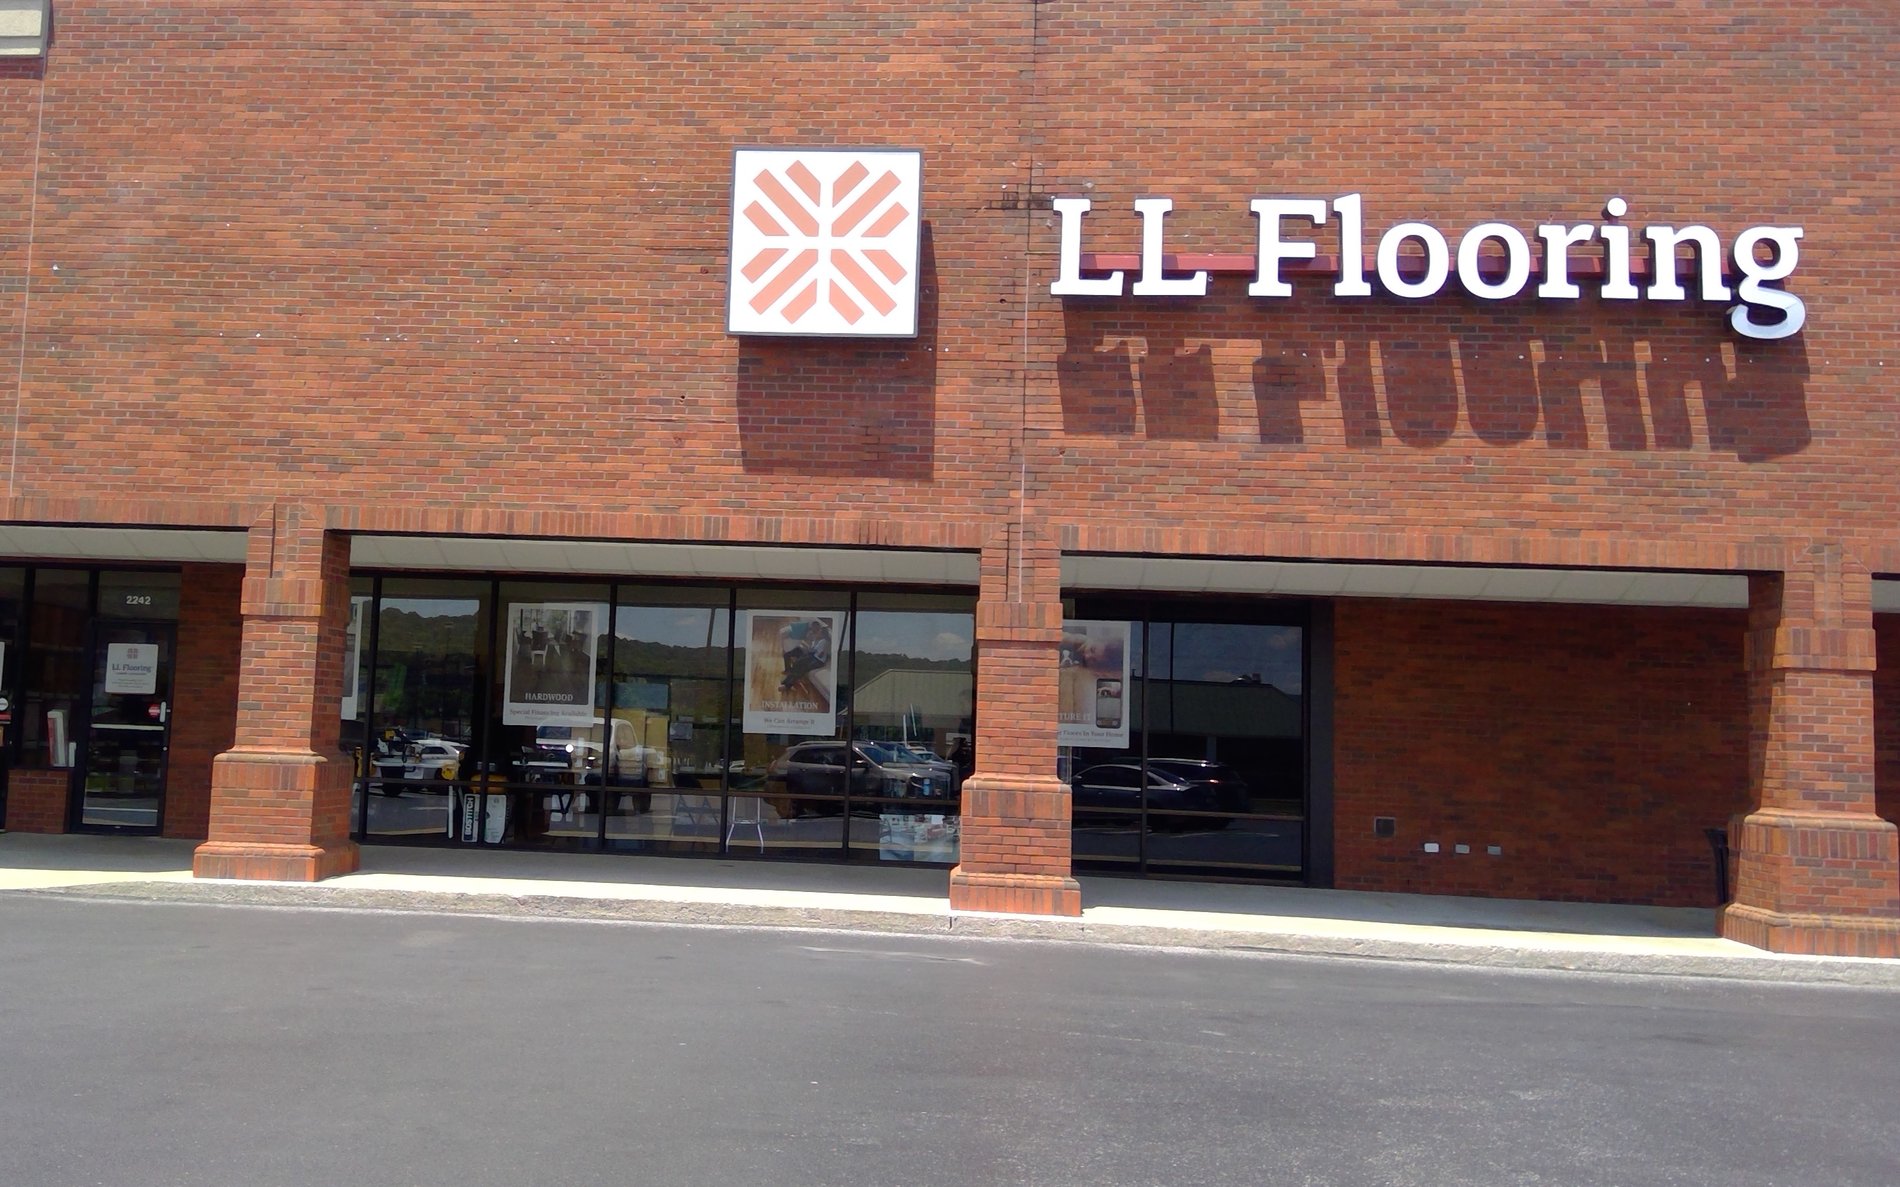 LL Flooring #1063 Pelham | 2242 Pelham Parkway | Storefront